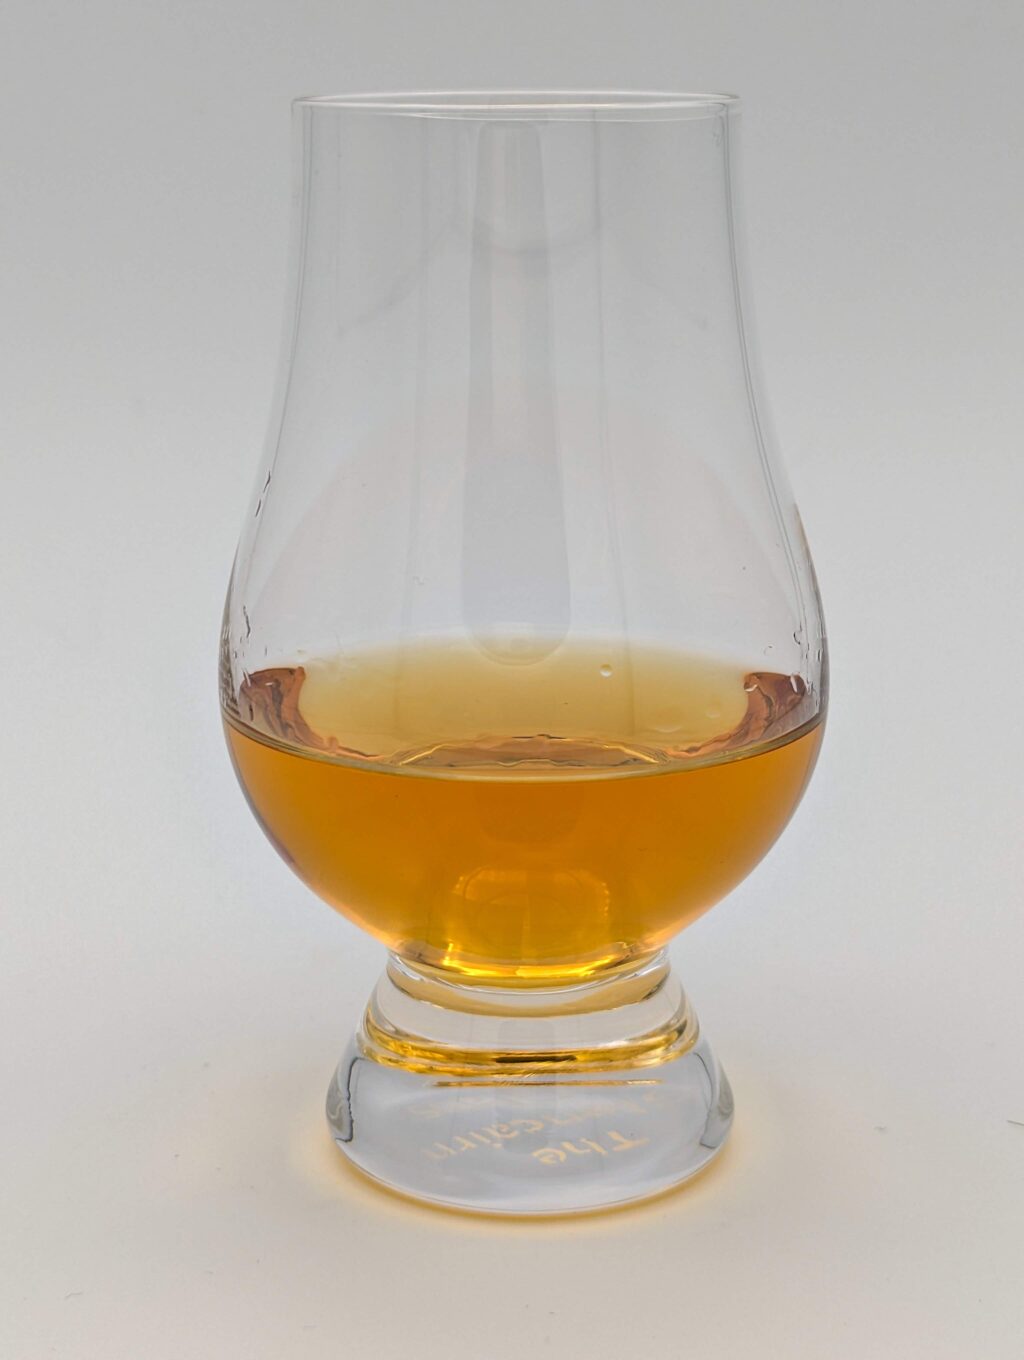 Gold Liquid in a glencairn glass